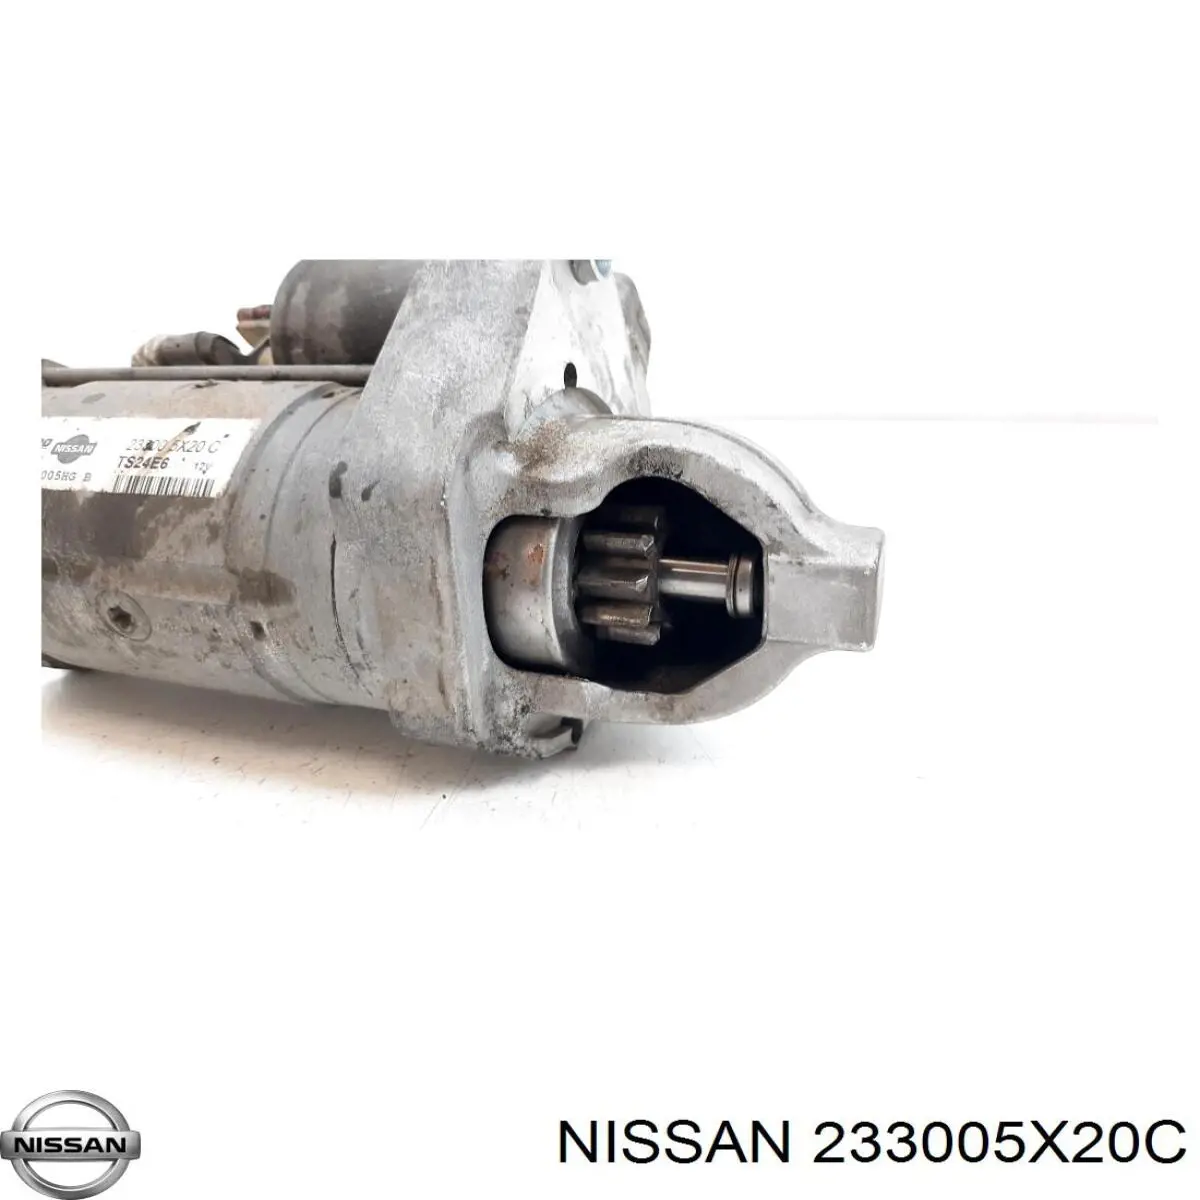 233005X20C Nissan motor de arranque